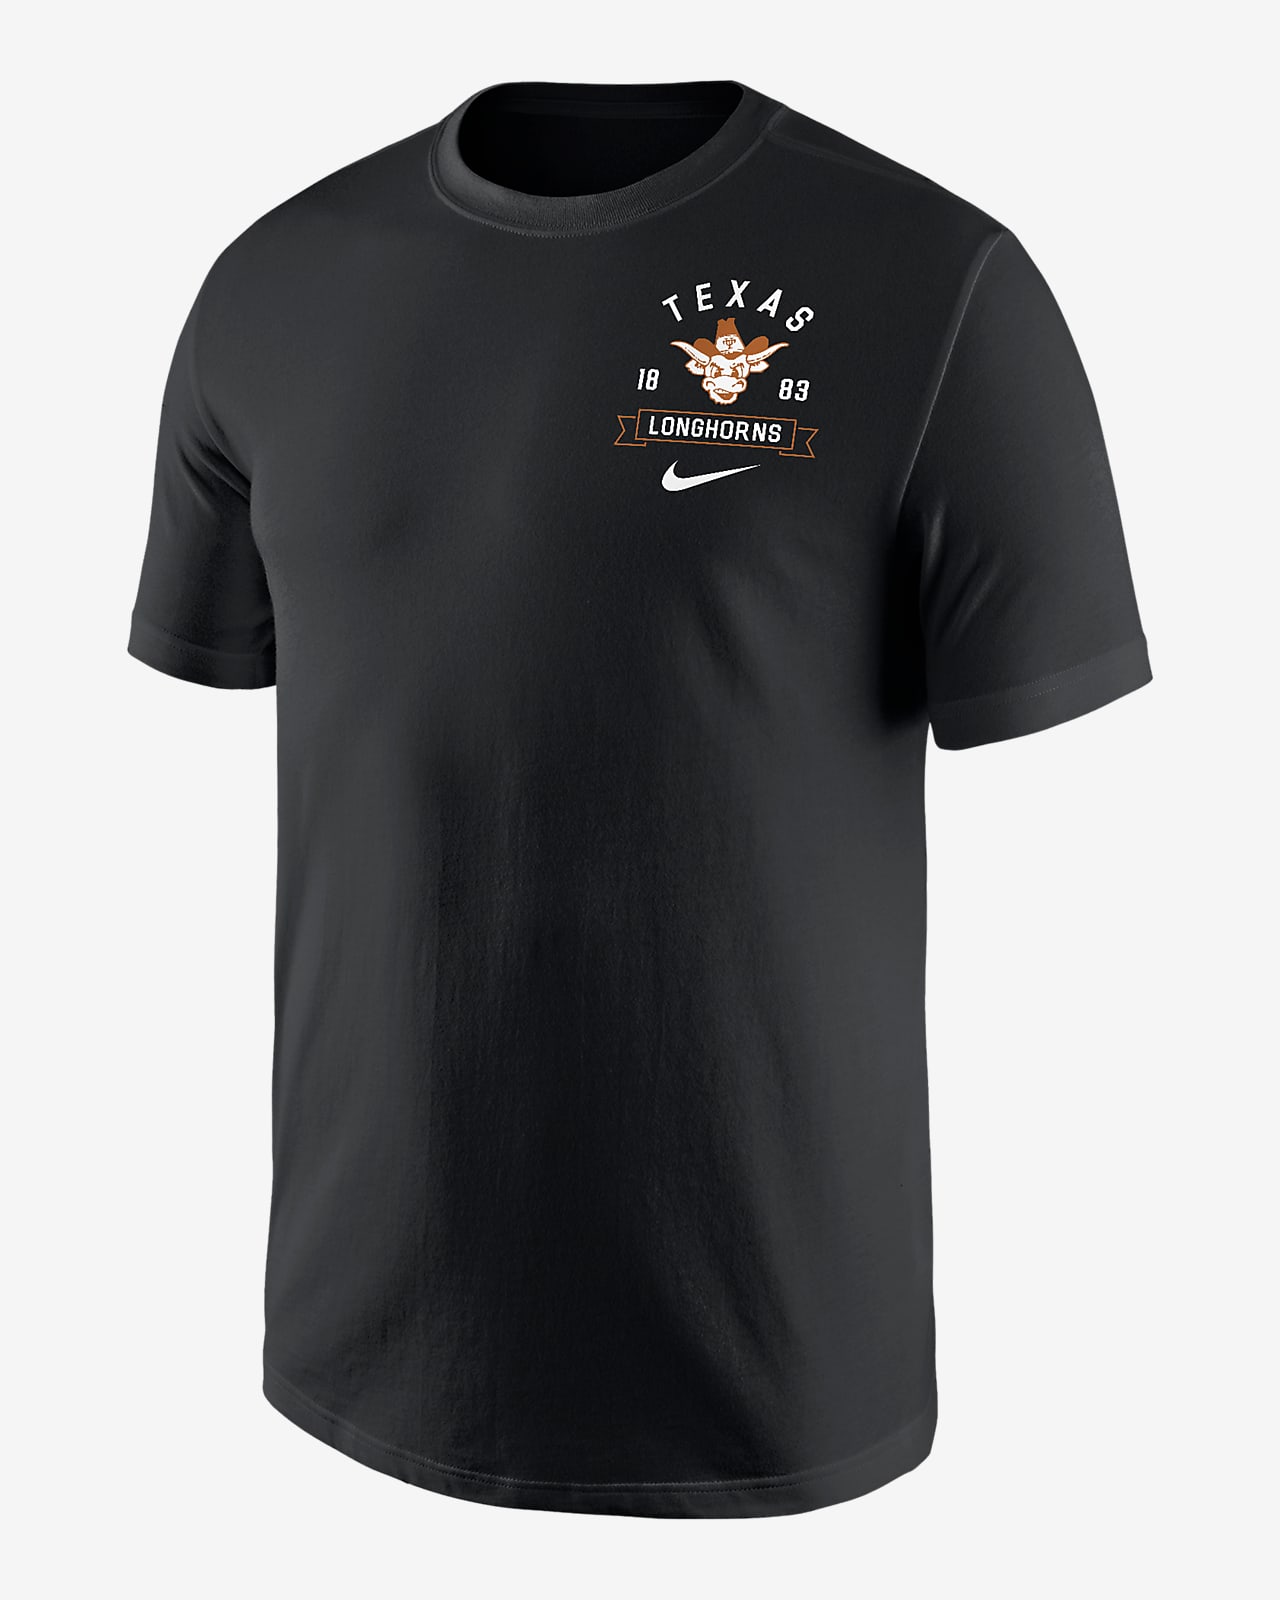 Texas Men's Nike College Max90 T-Shirt